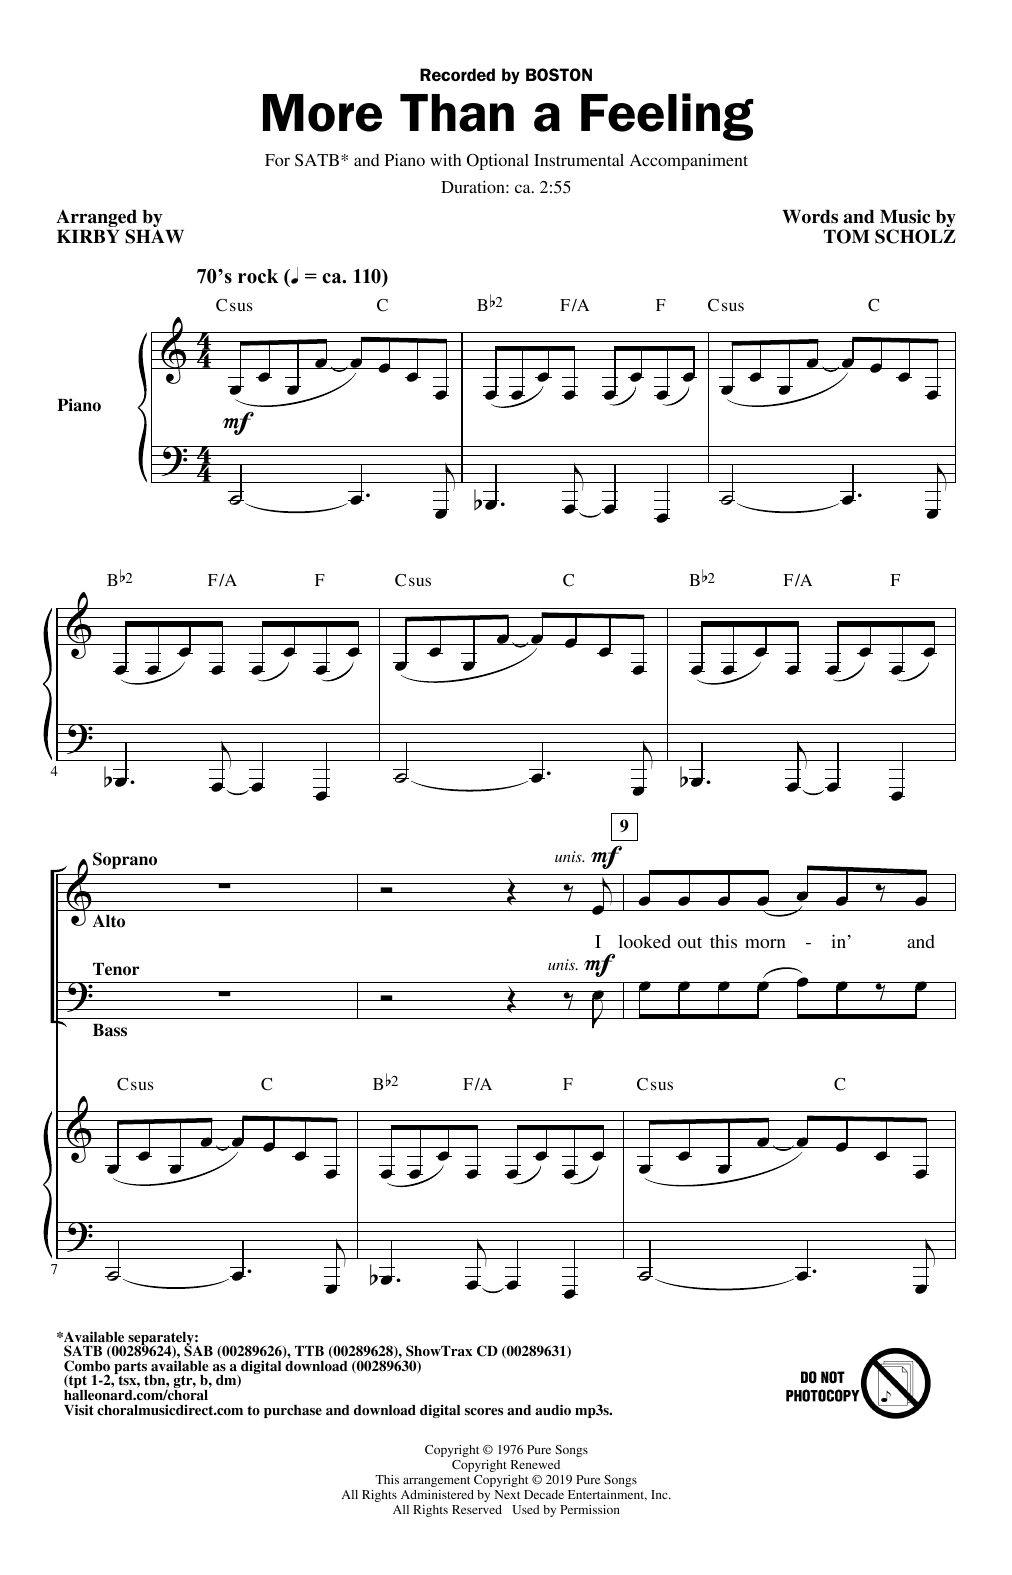 Boston More Than a Feeling (arr. Kirby Shaw) Sheet Music Notes & Chords for SAB Choir - Download or Print PDF